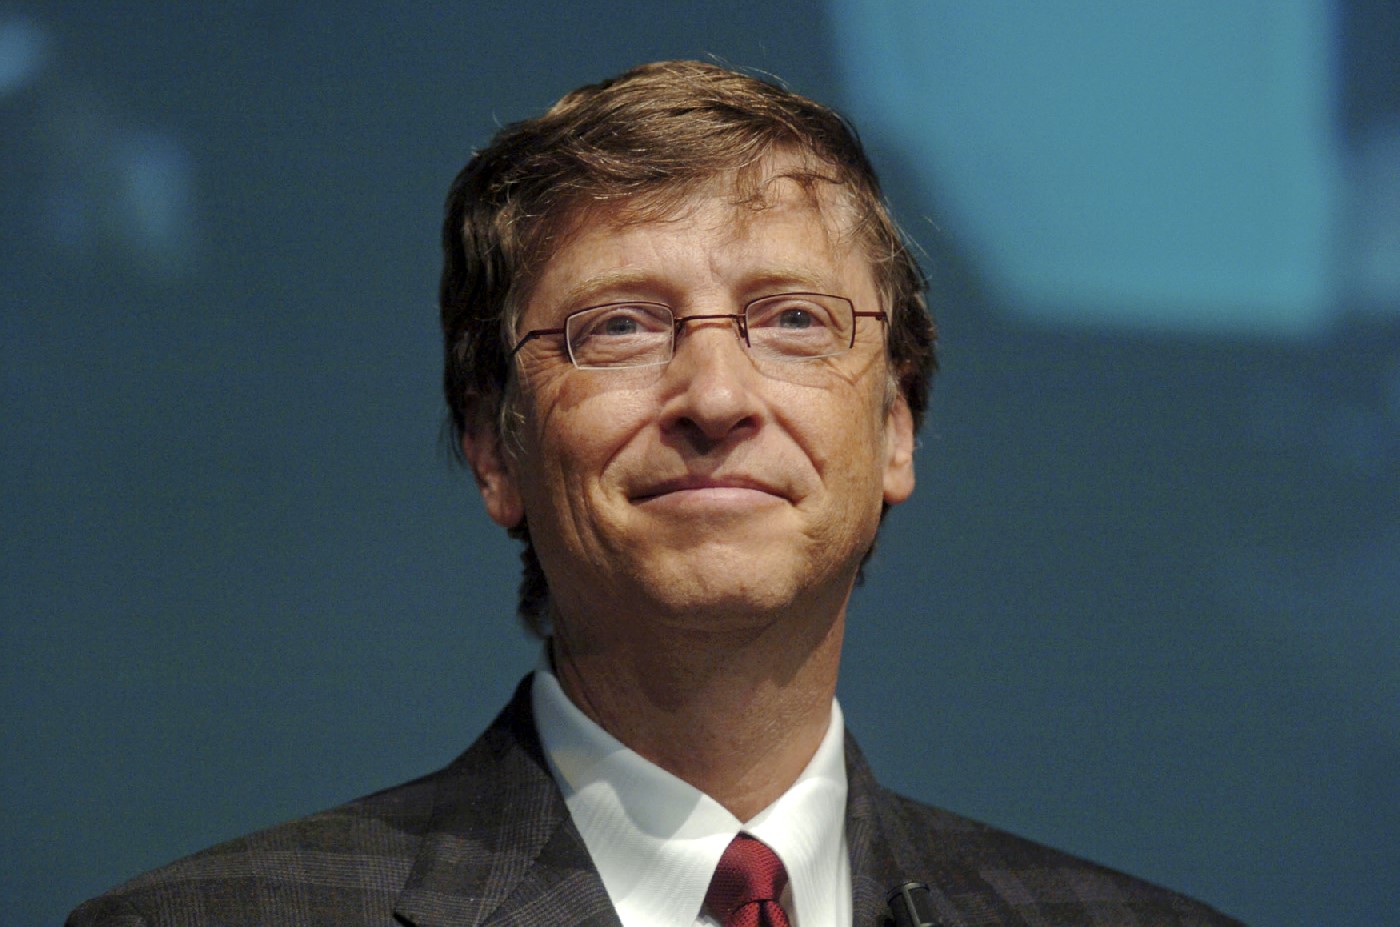 3 - Bill Gates: Microsoft's Innovative Co-Founder